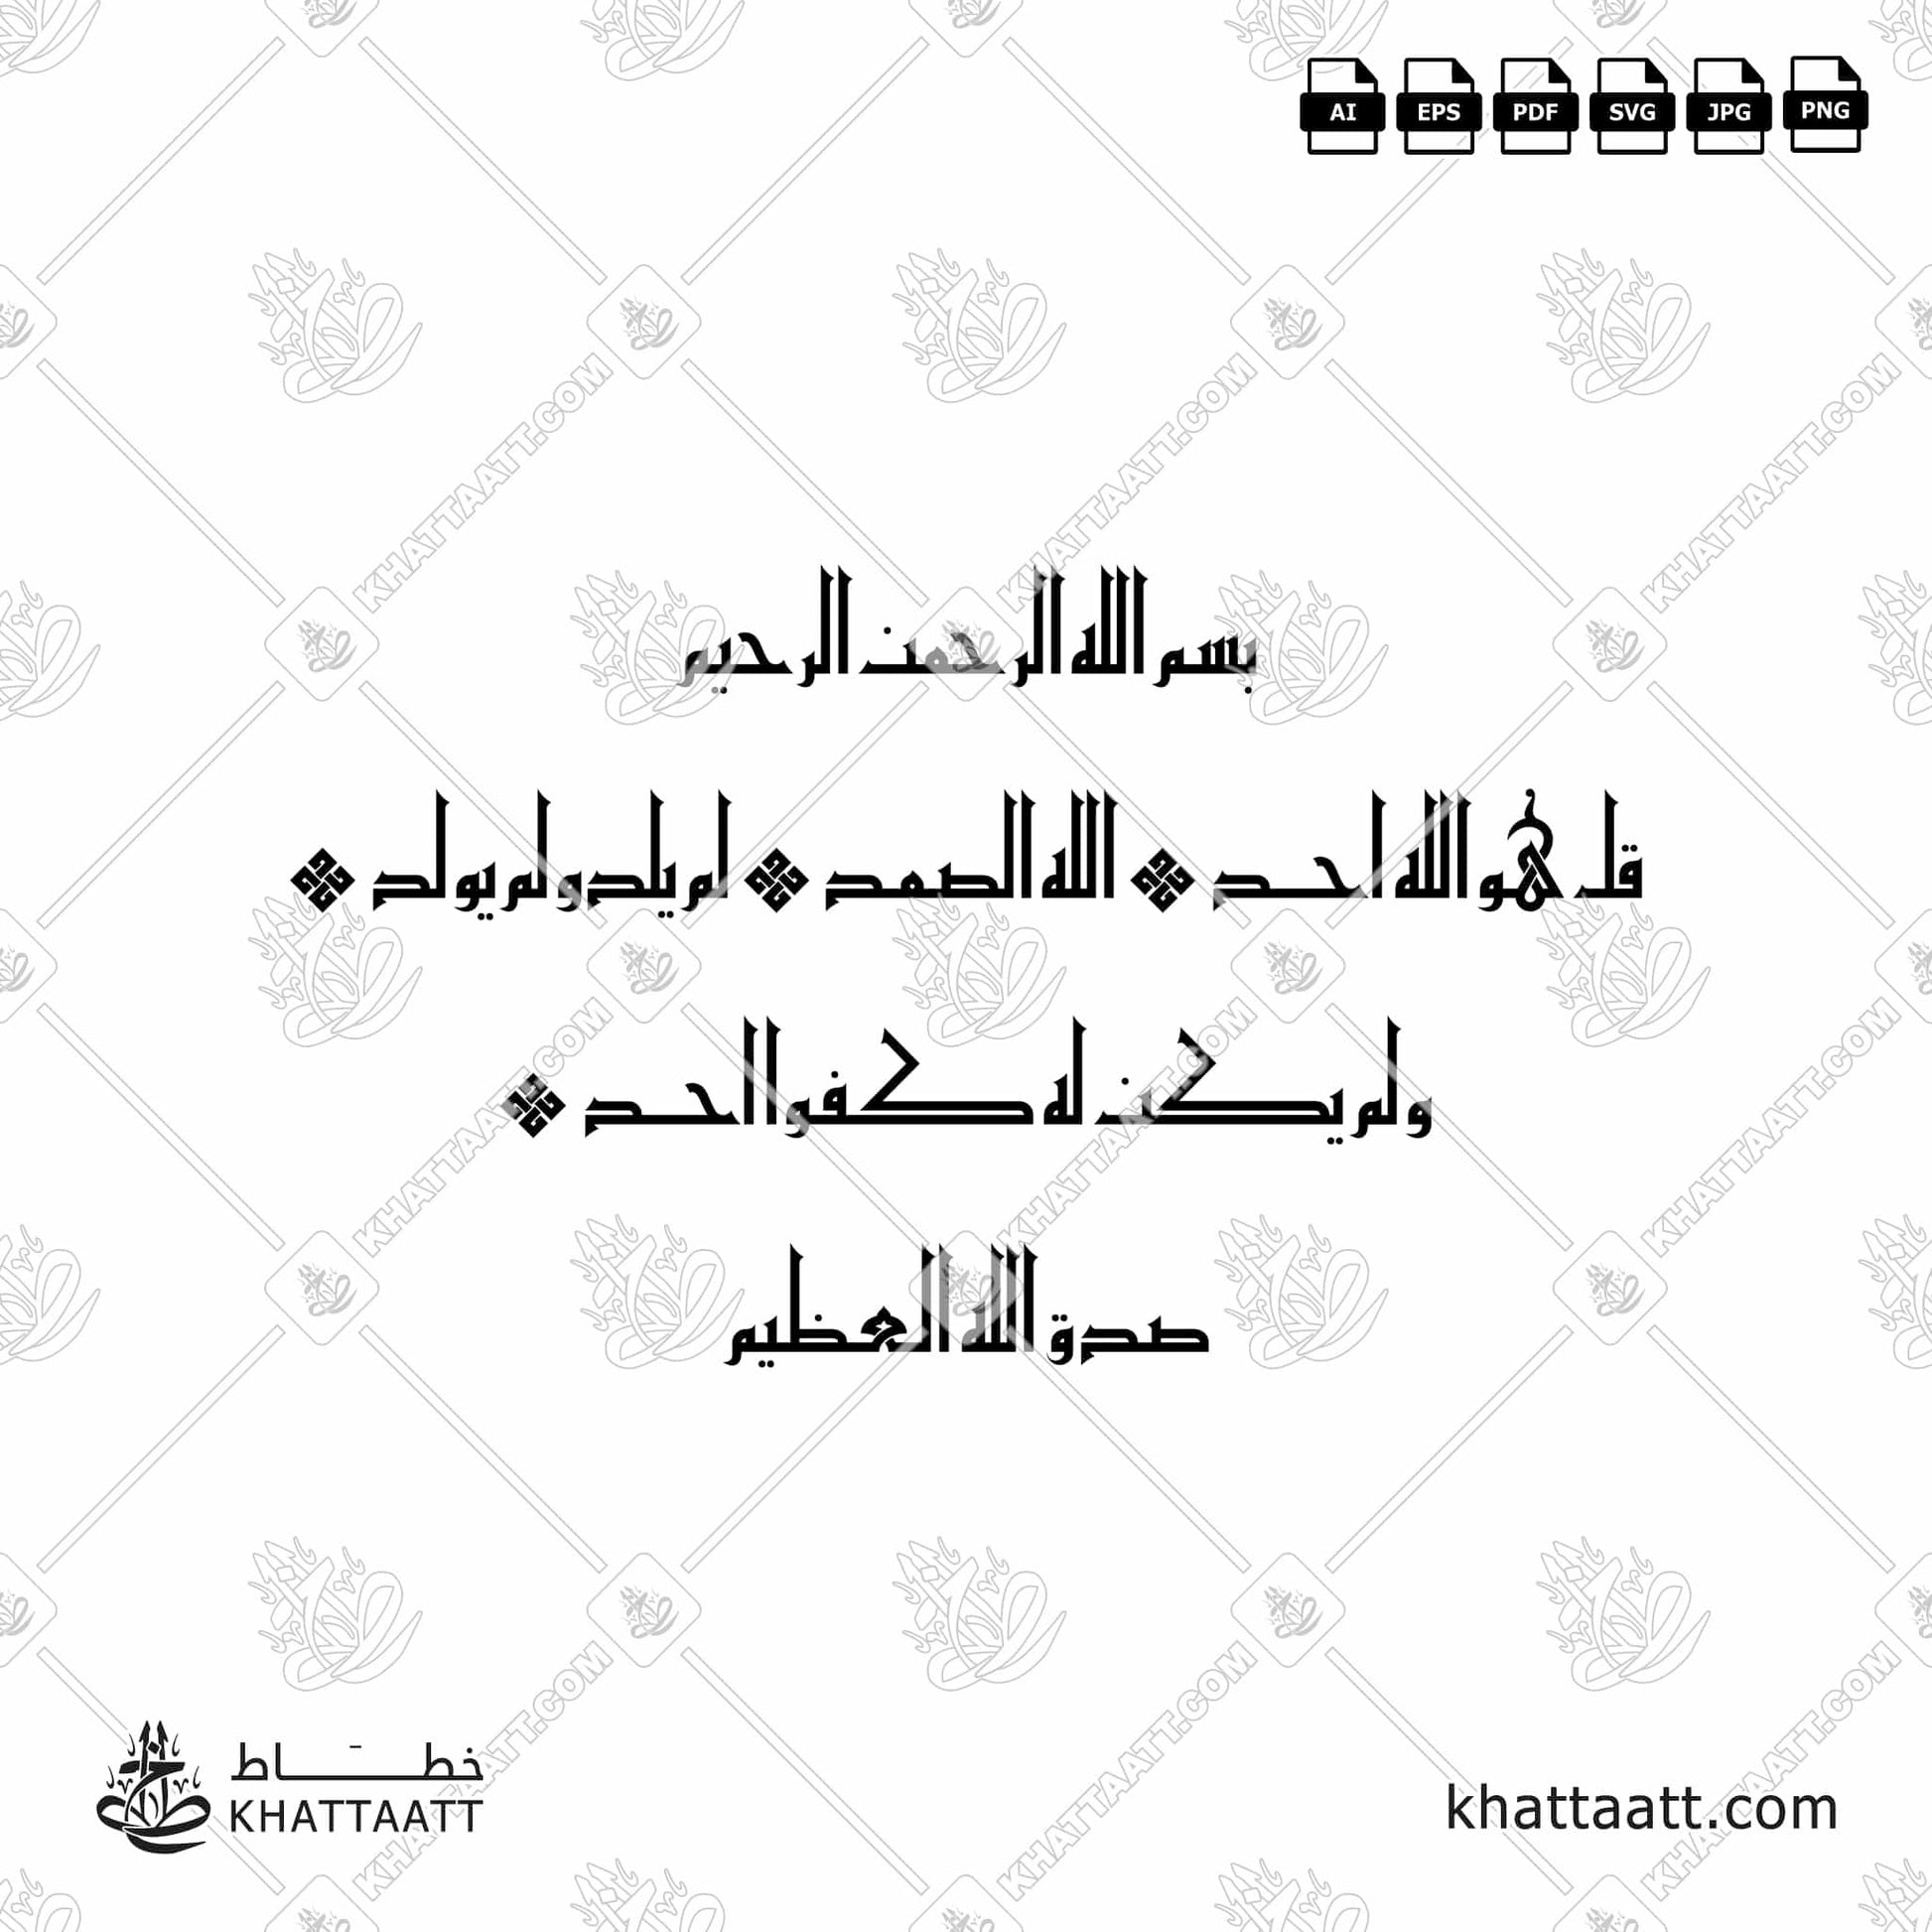 Download Arabic calligraphy تحميل مخطوطة خط عربي of Surat Al-Ikhlas - سورة الإخلاص (KE011) Kufi - الخط الكوفي in vector فيكتور and png